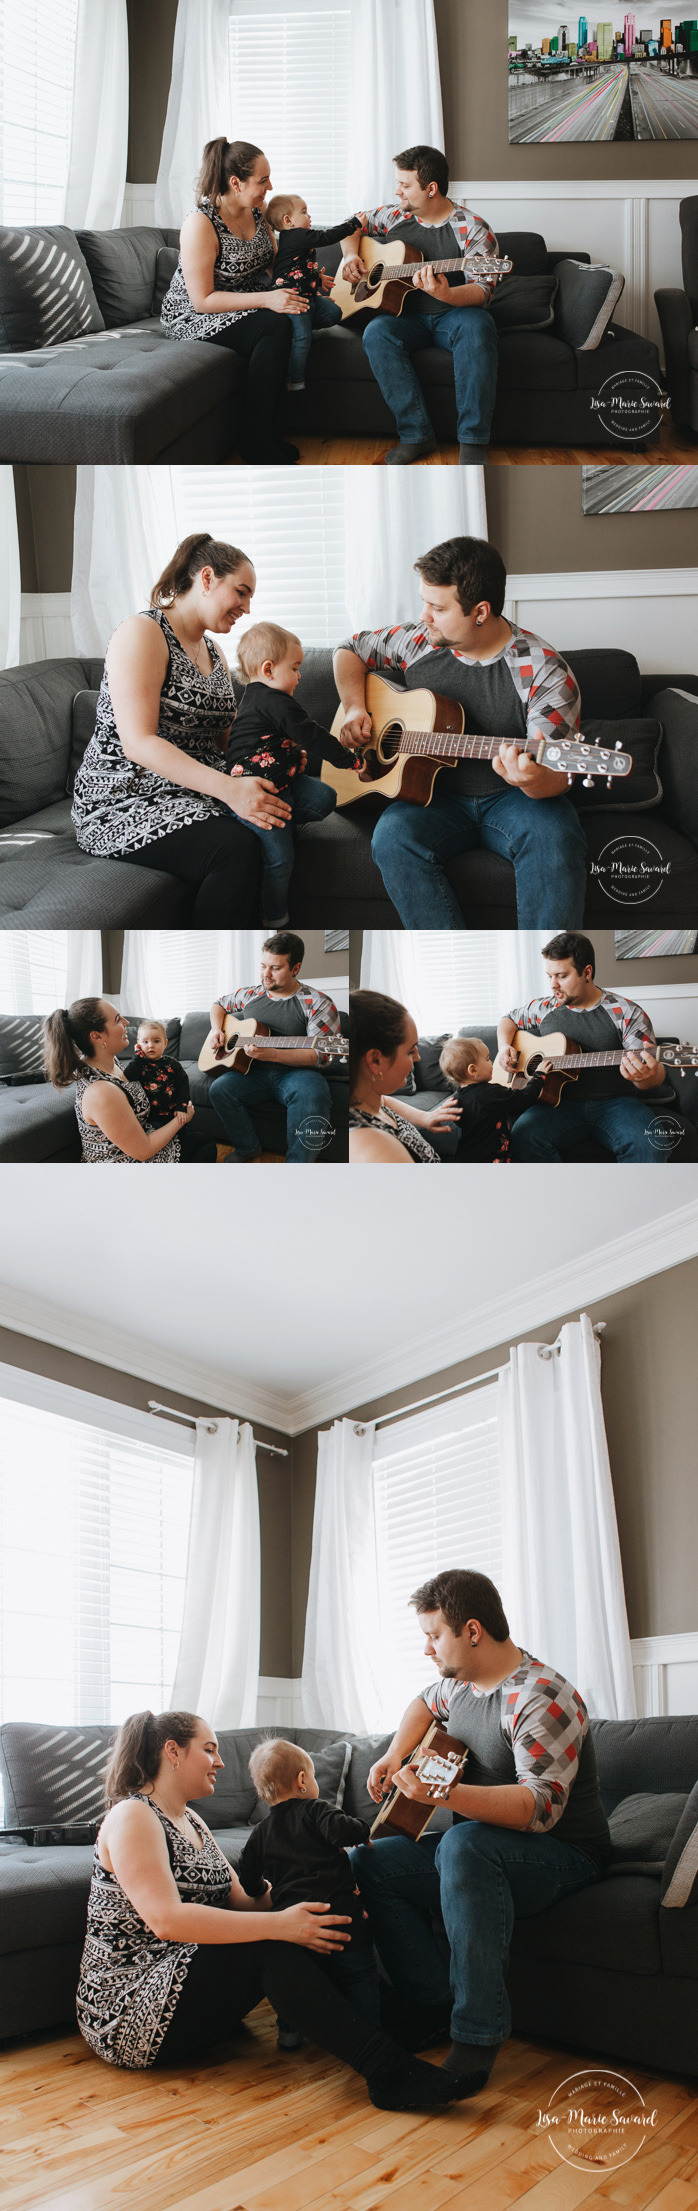 Lifestyle family sessions with guitar. Family photos playing music. Séance familiale lifestyle avec guitare à Montréal